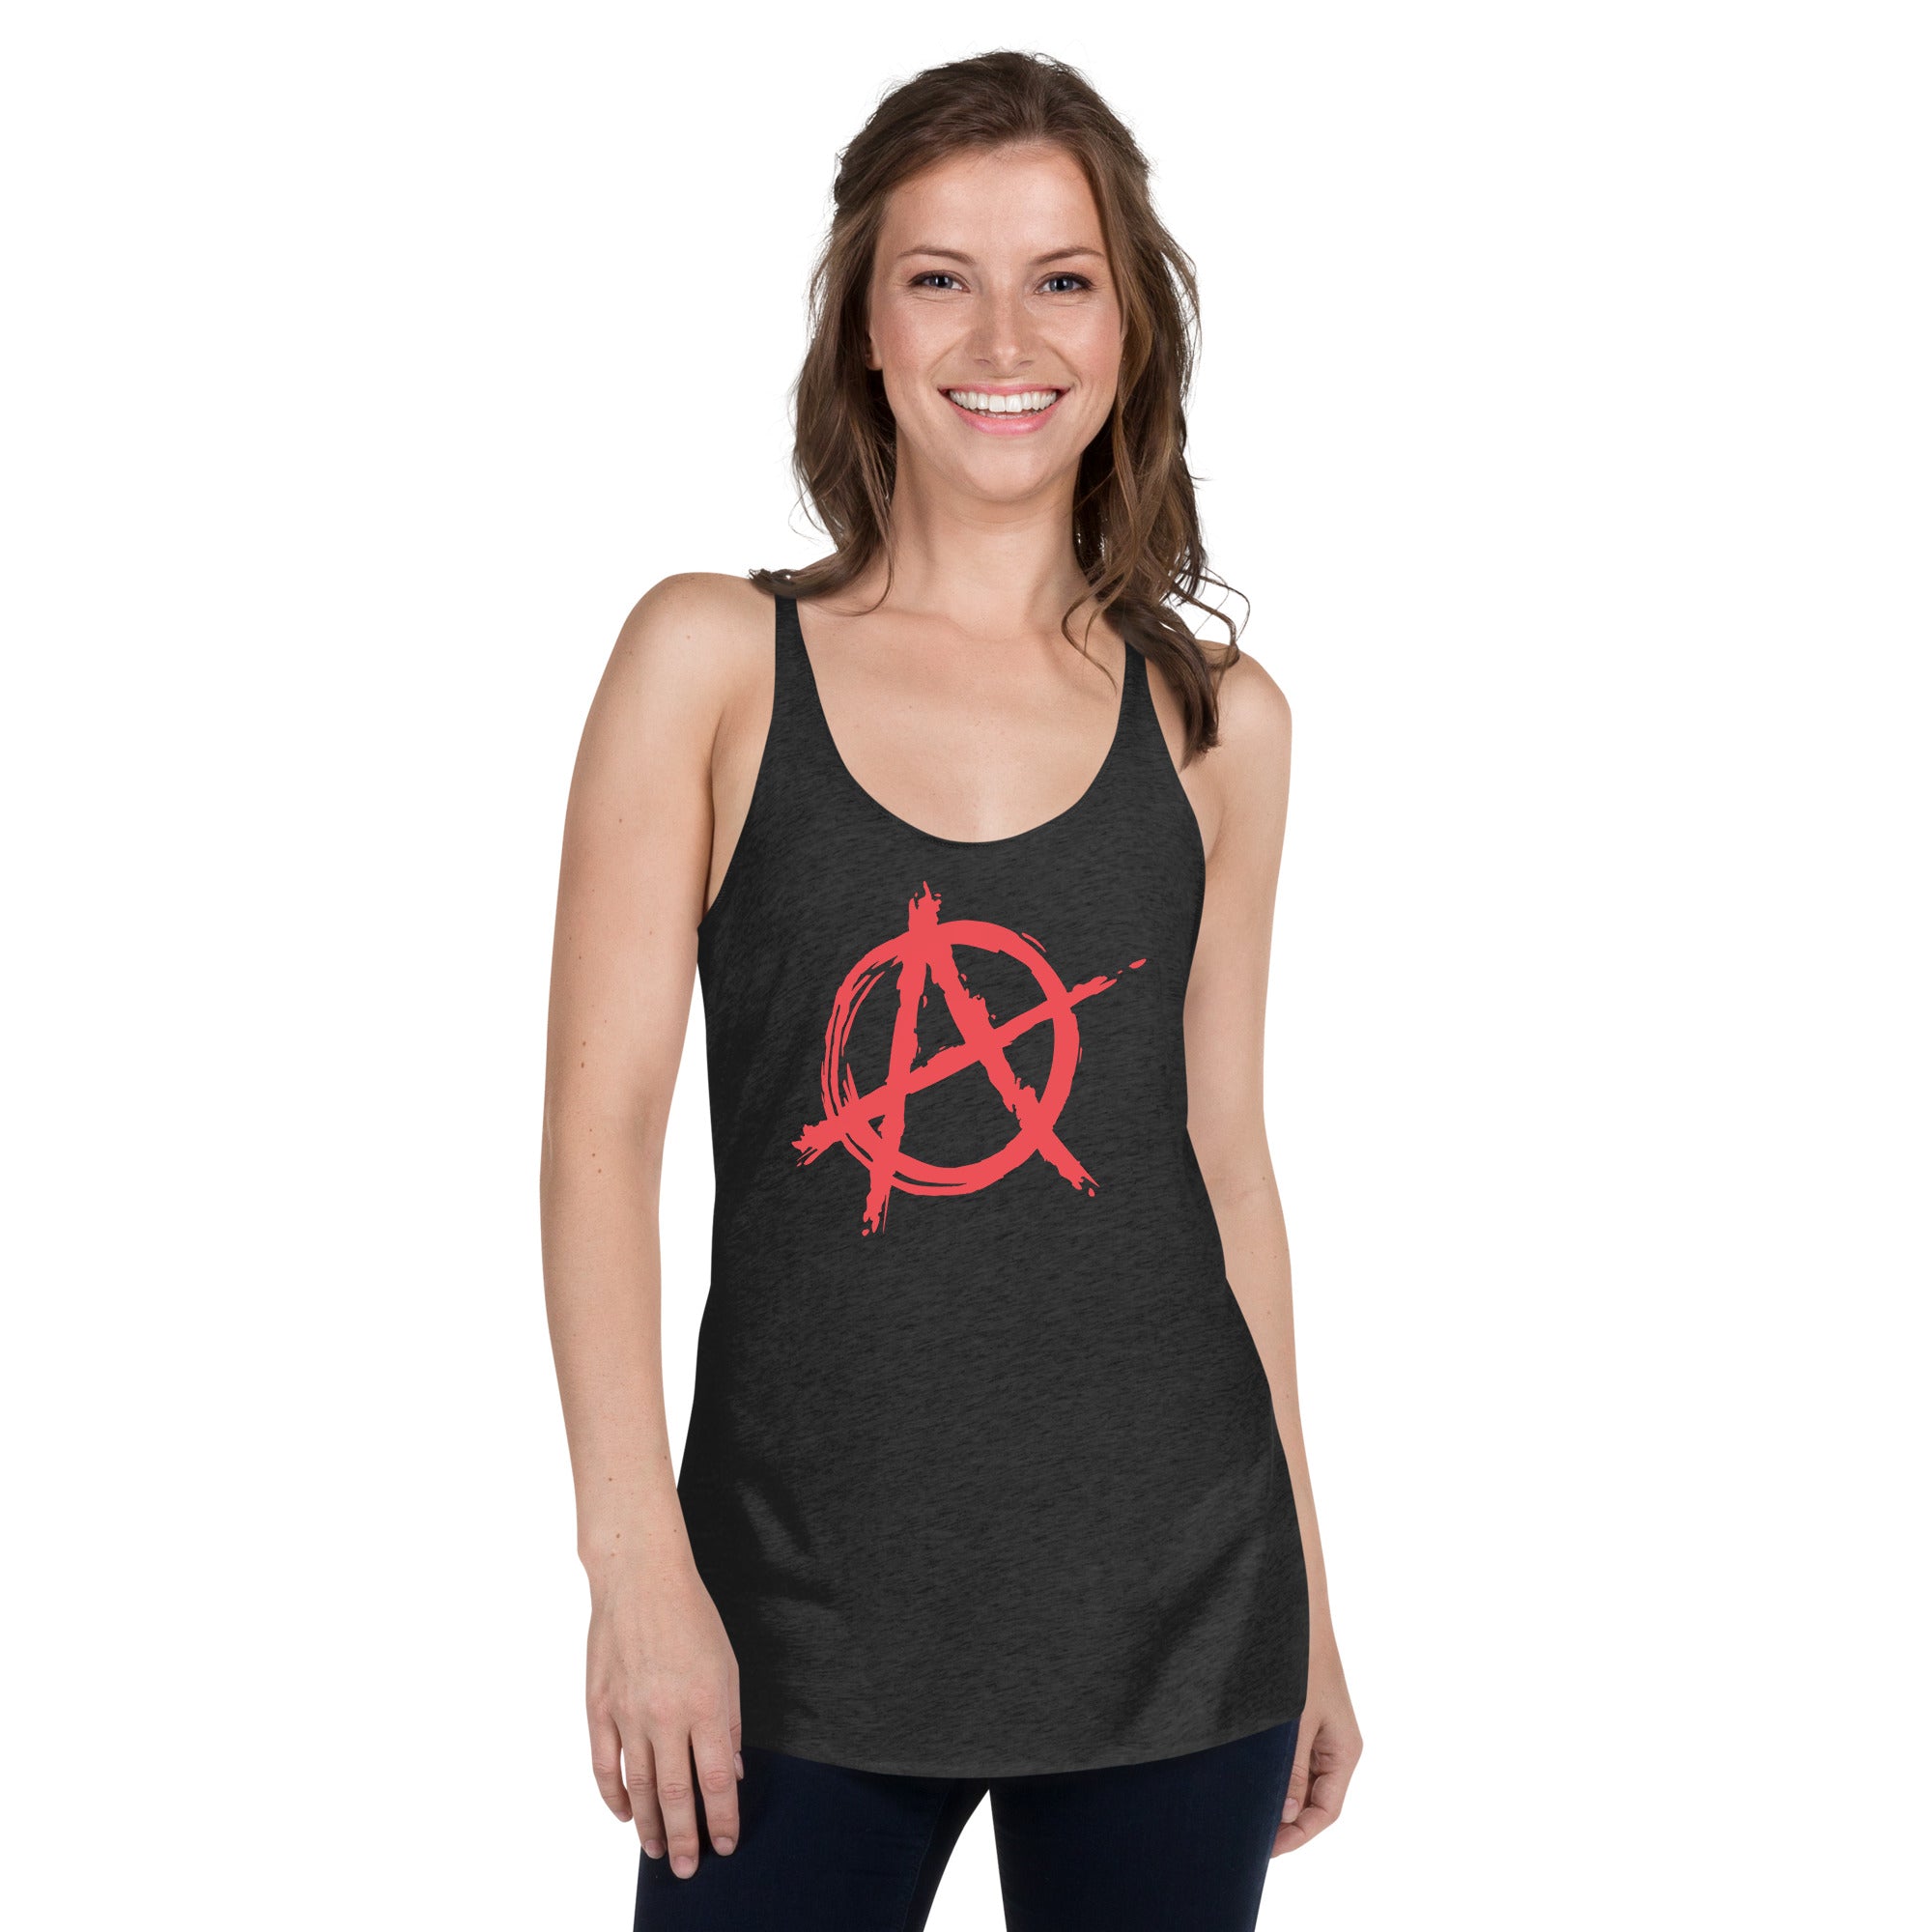 Red Anarchy is Order Symbol Punk Rock Women's Racerback Tank Top Shirt